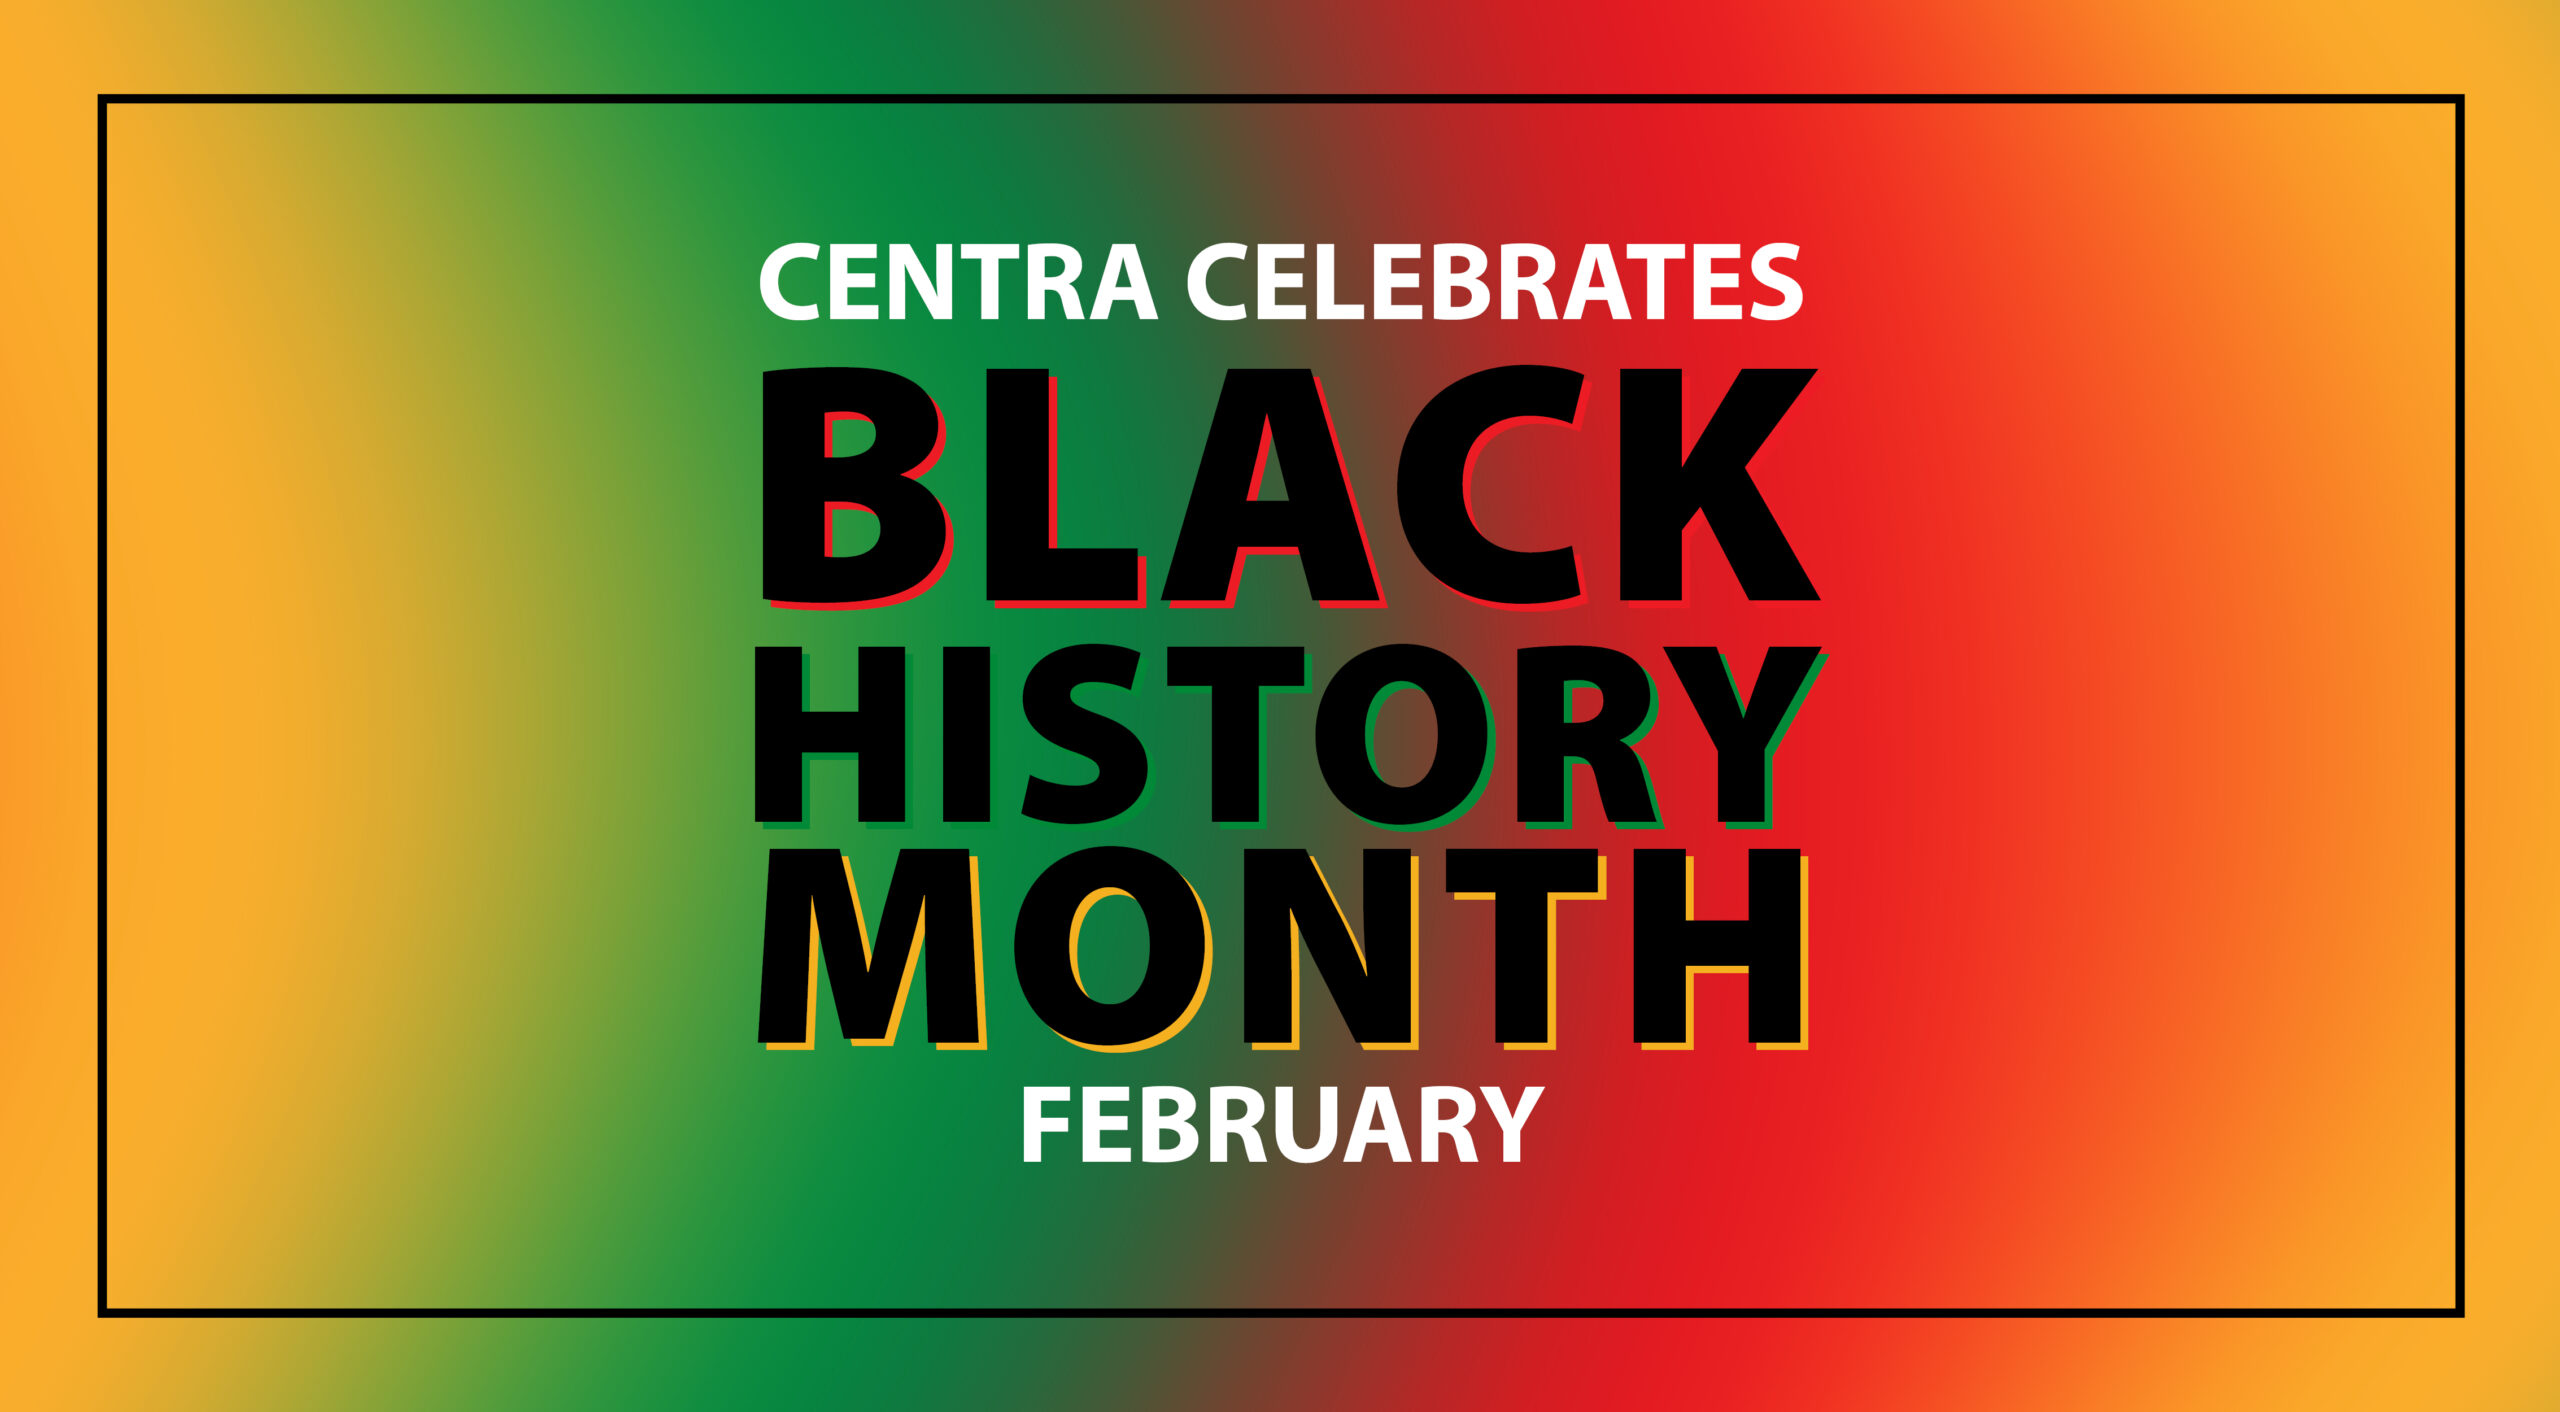 Centra celebrates Black History Month